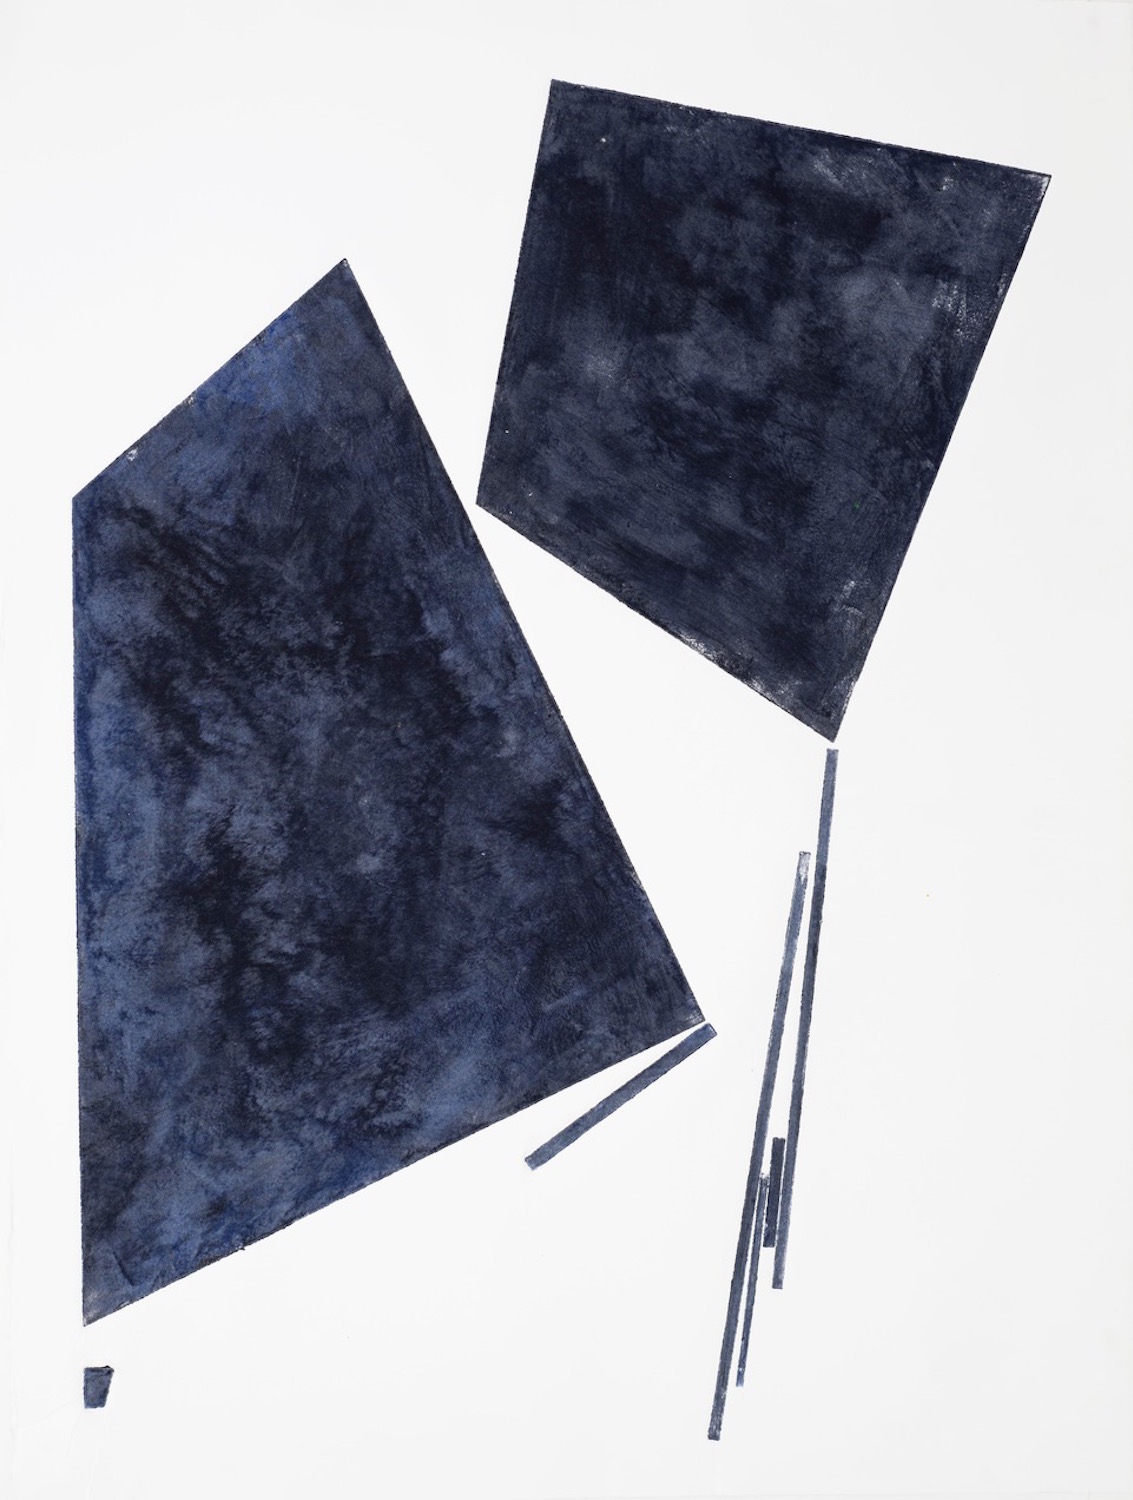  Luisa Duarte, Conversation 1, 2014. Monotype on paper, 30 x 22 x 0 in. 